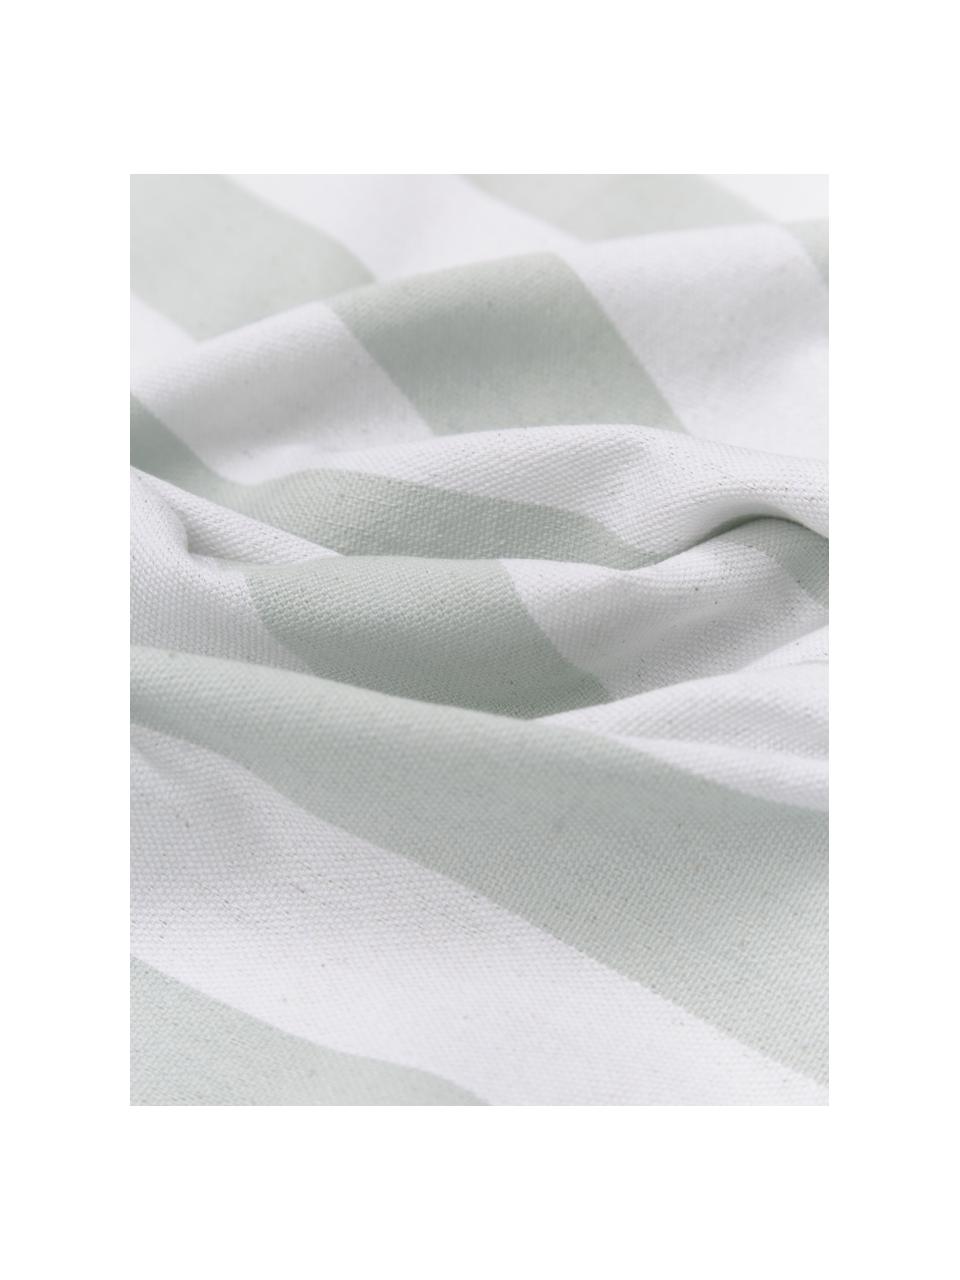 Fouta rayé à franges Arcachon, 100 % coton, Blanc, rose blush, gris clair, vert clair, larg. 100 x long. 200 cm